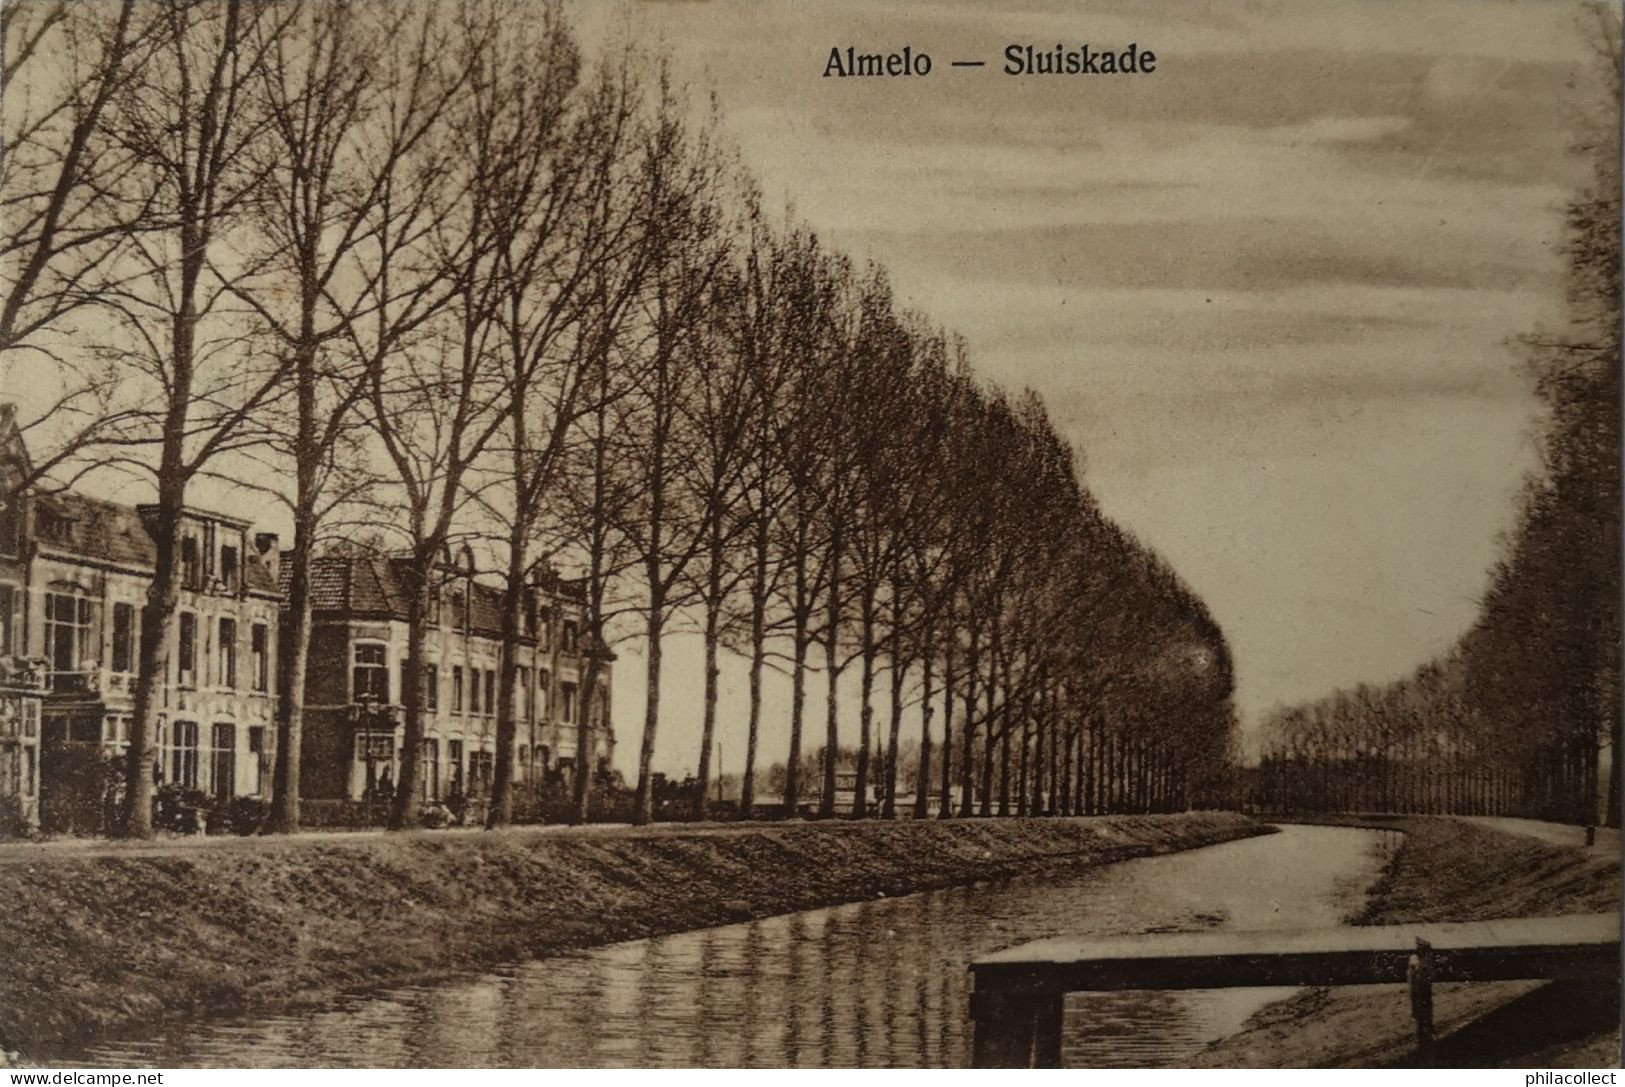 Almelo (Ov.) Sluiskade 1922 - Almelo